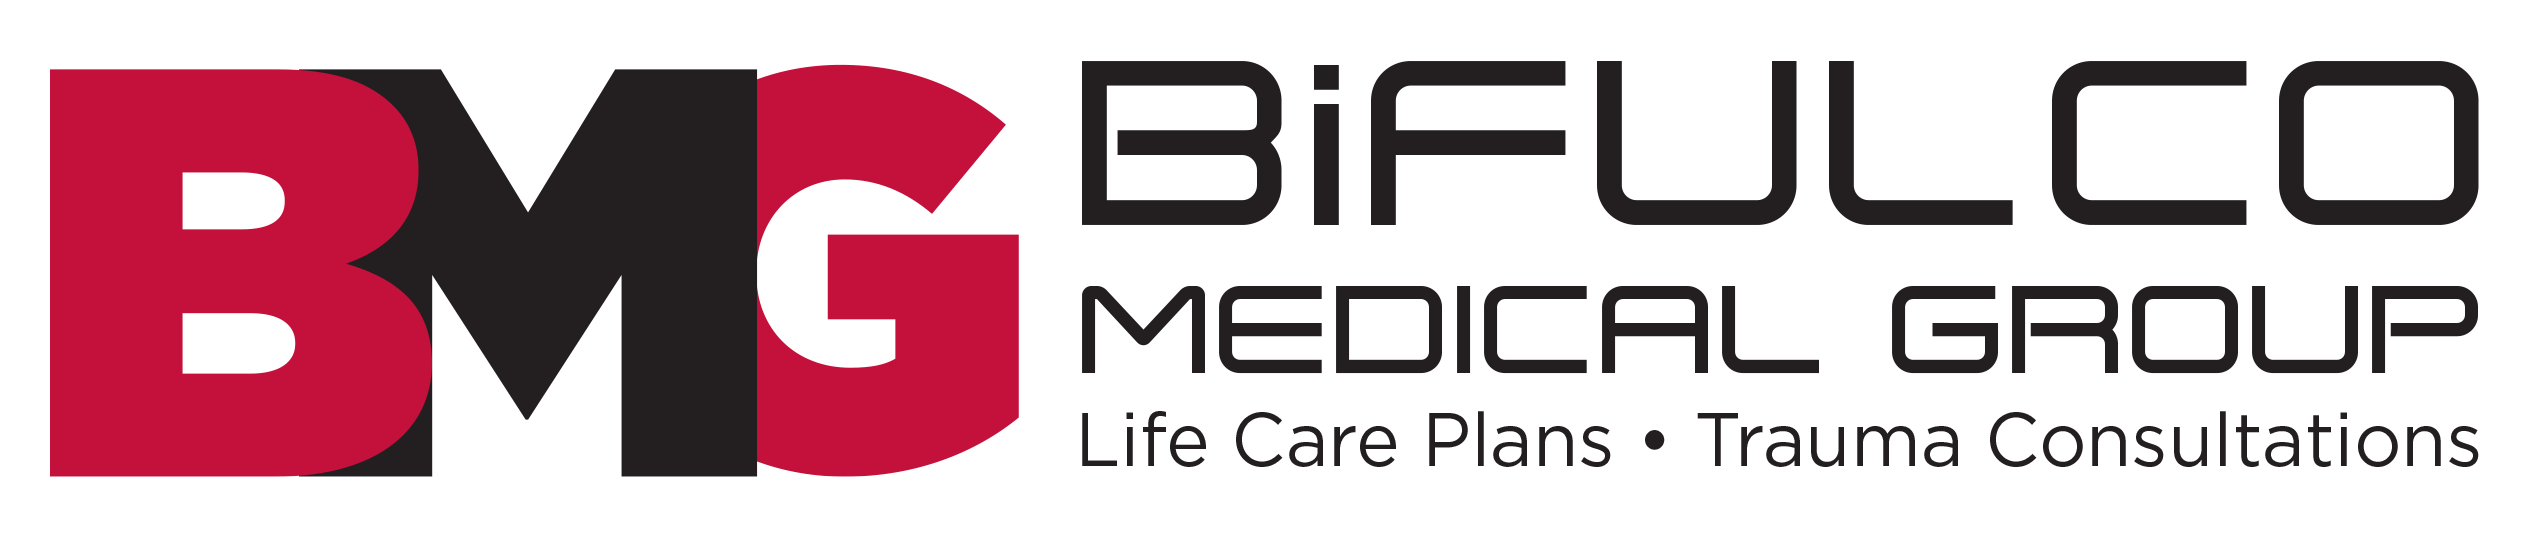 BiFulco Medical Group